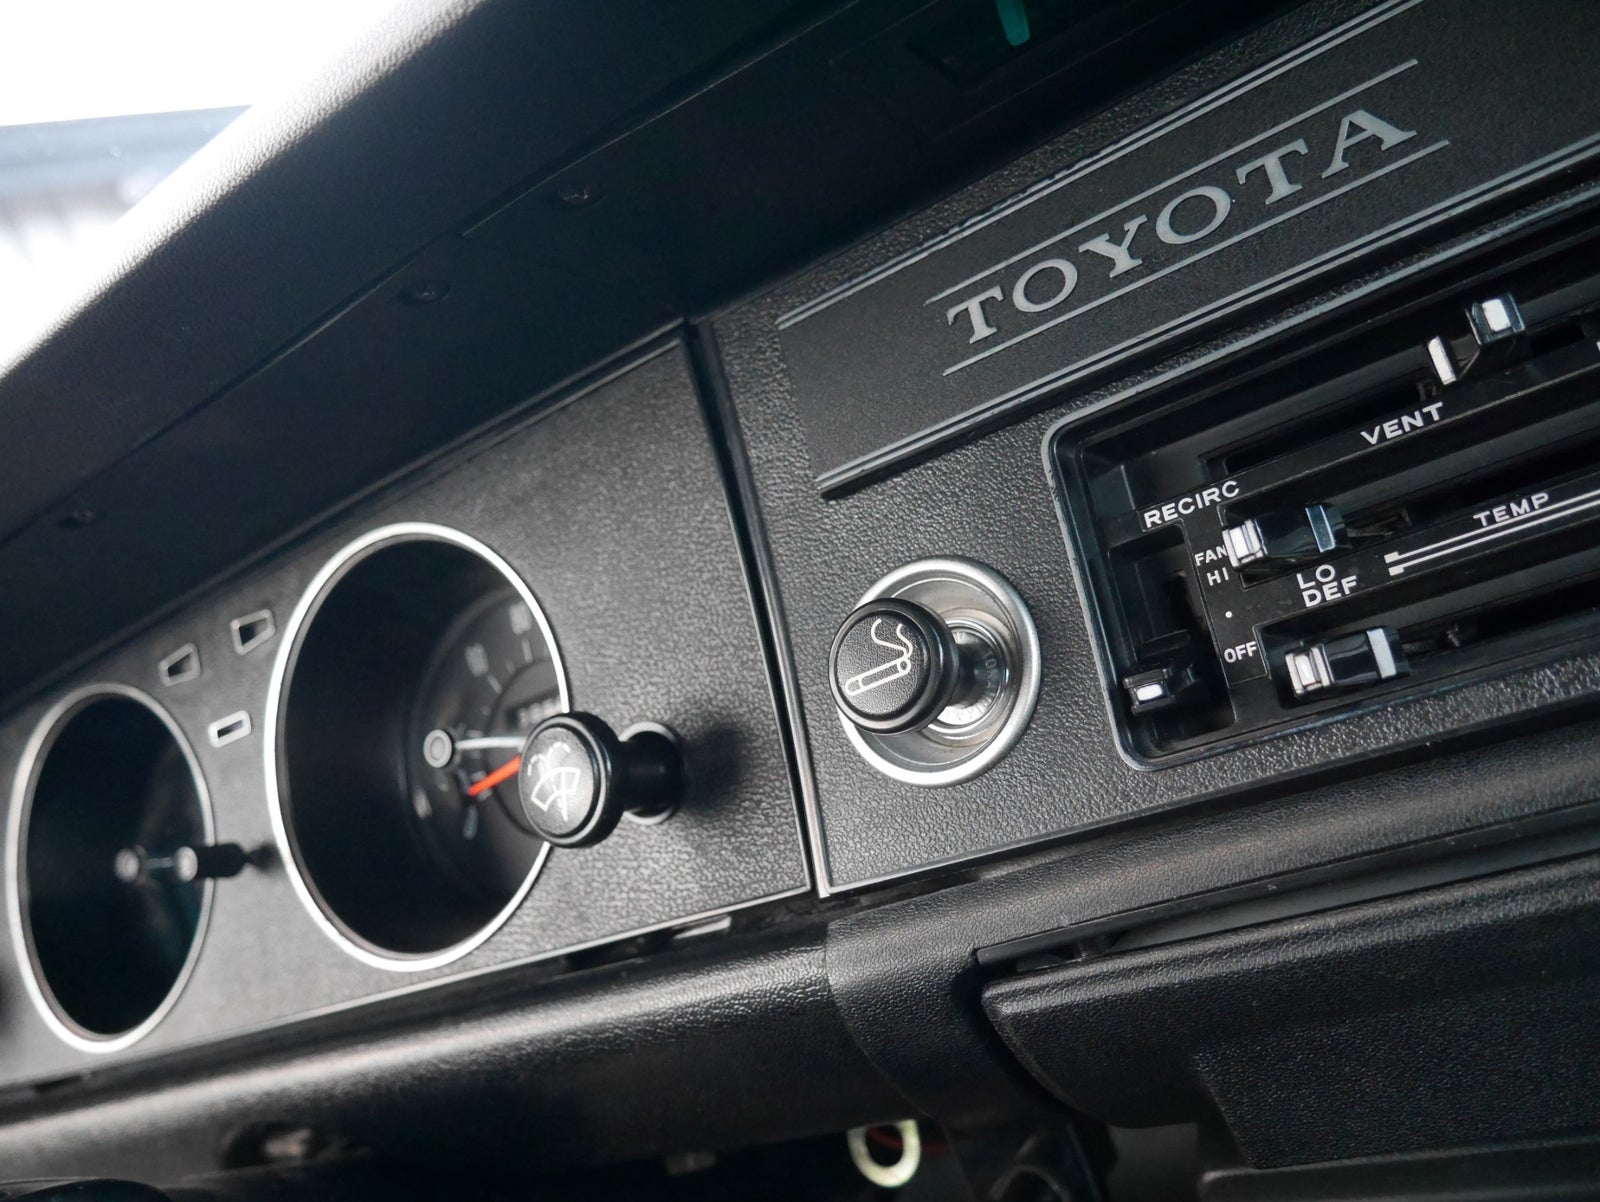 Toyota Corolla 1,2 Benzin modelår 1972 km 139000 Brunmetal